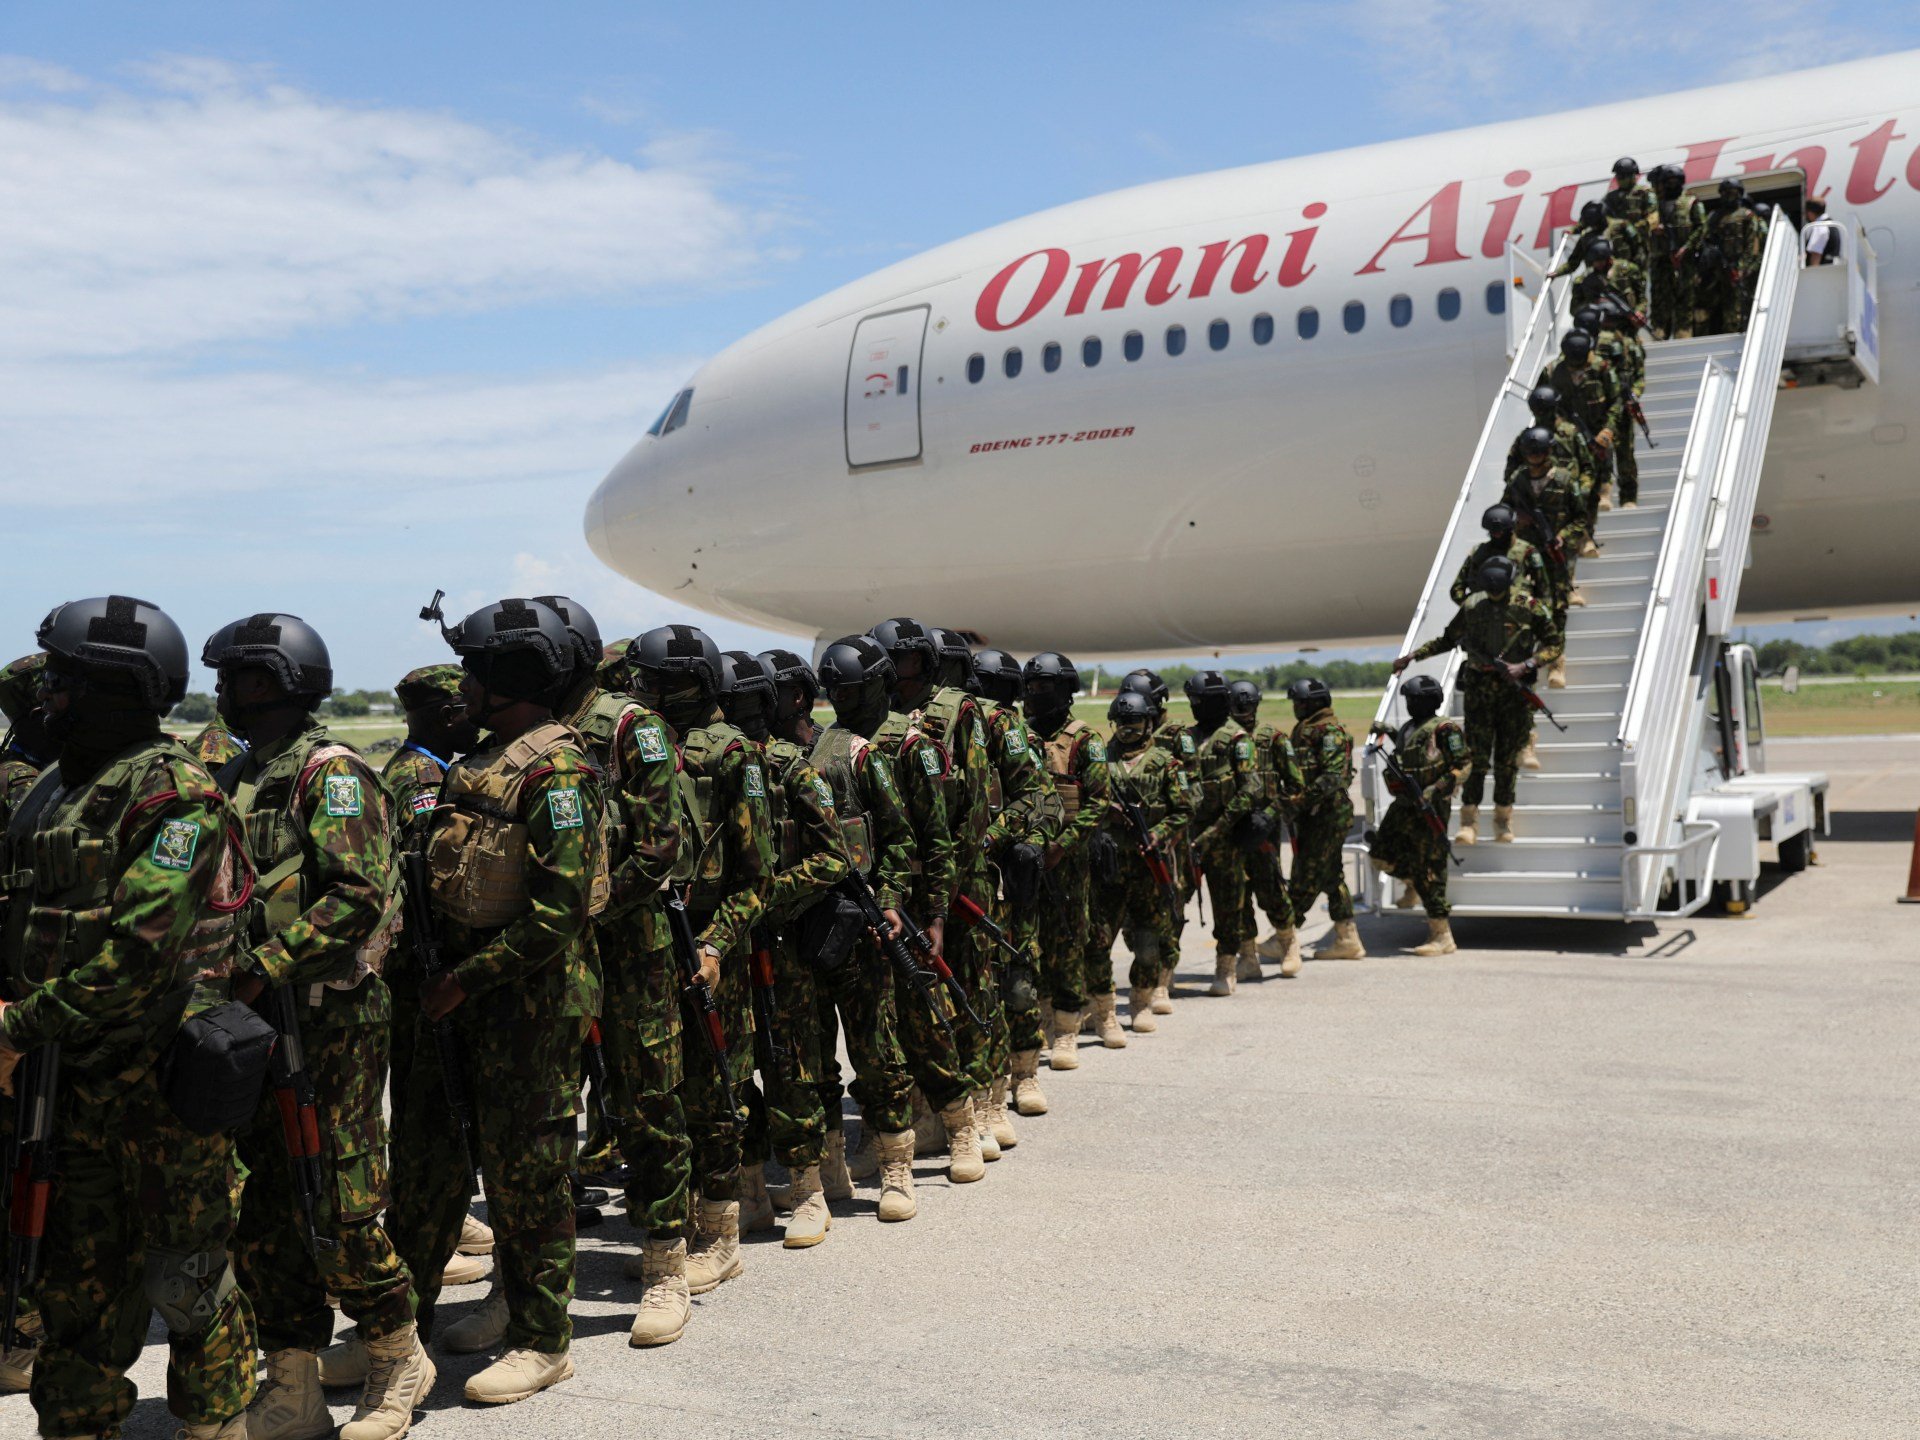 More Kenyan police deploy to tackle Haiti violence